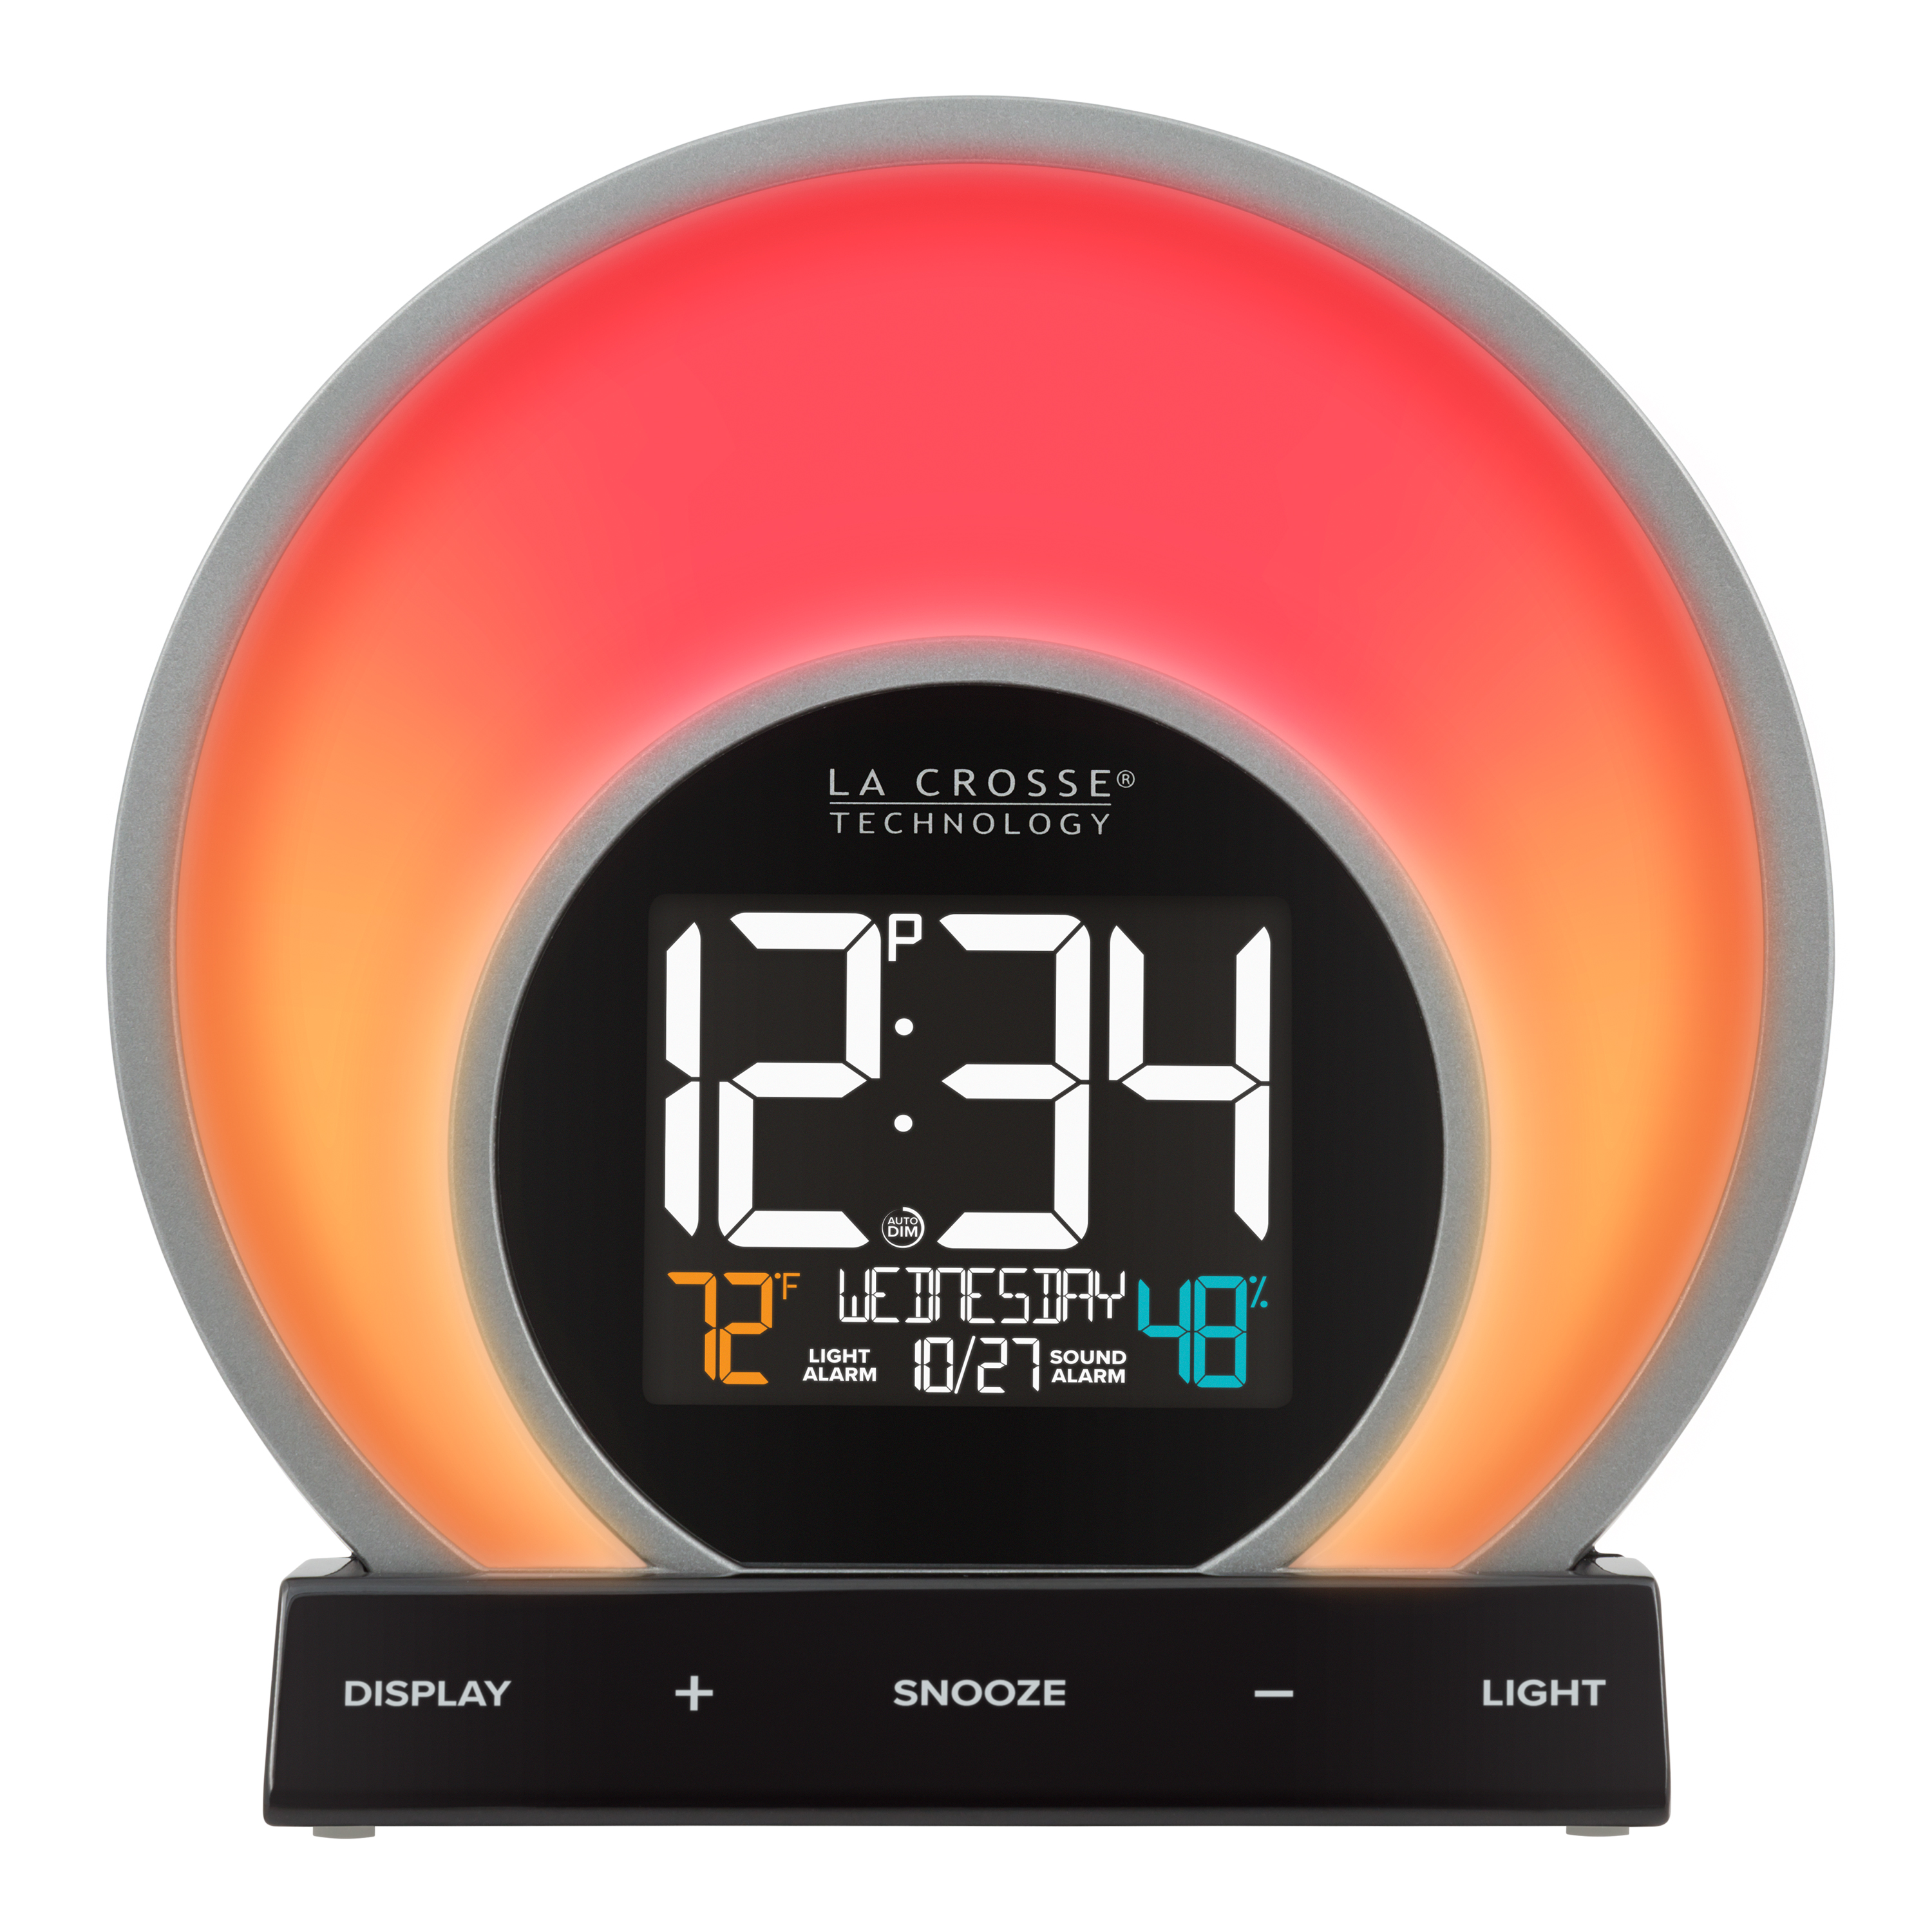 La Crosse Technology Digital Soluna Sunrise & Sunset Light Alarm Clock with USB charging port, C80994 - image 2 of 10